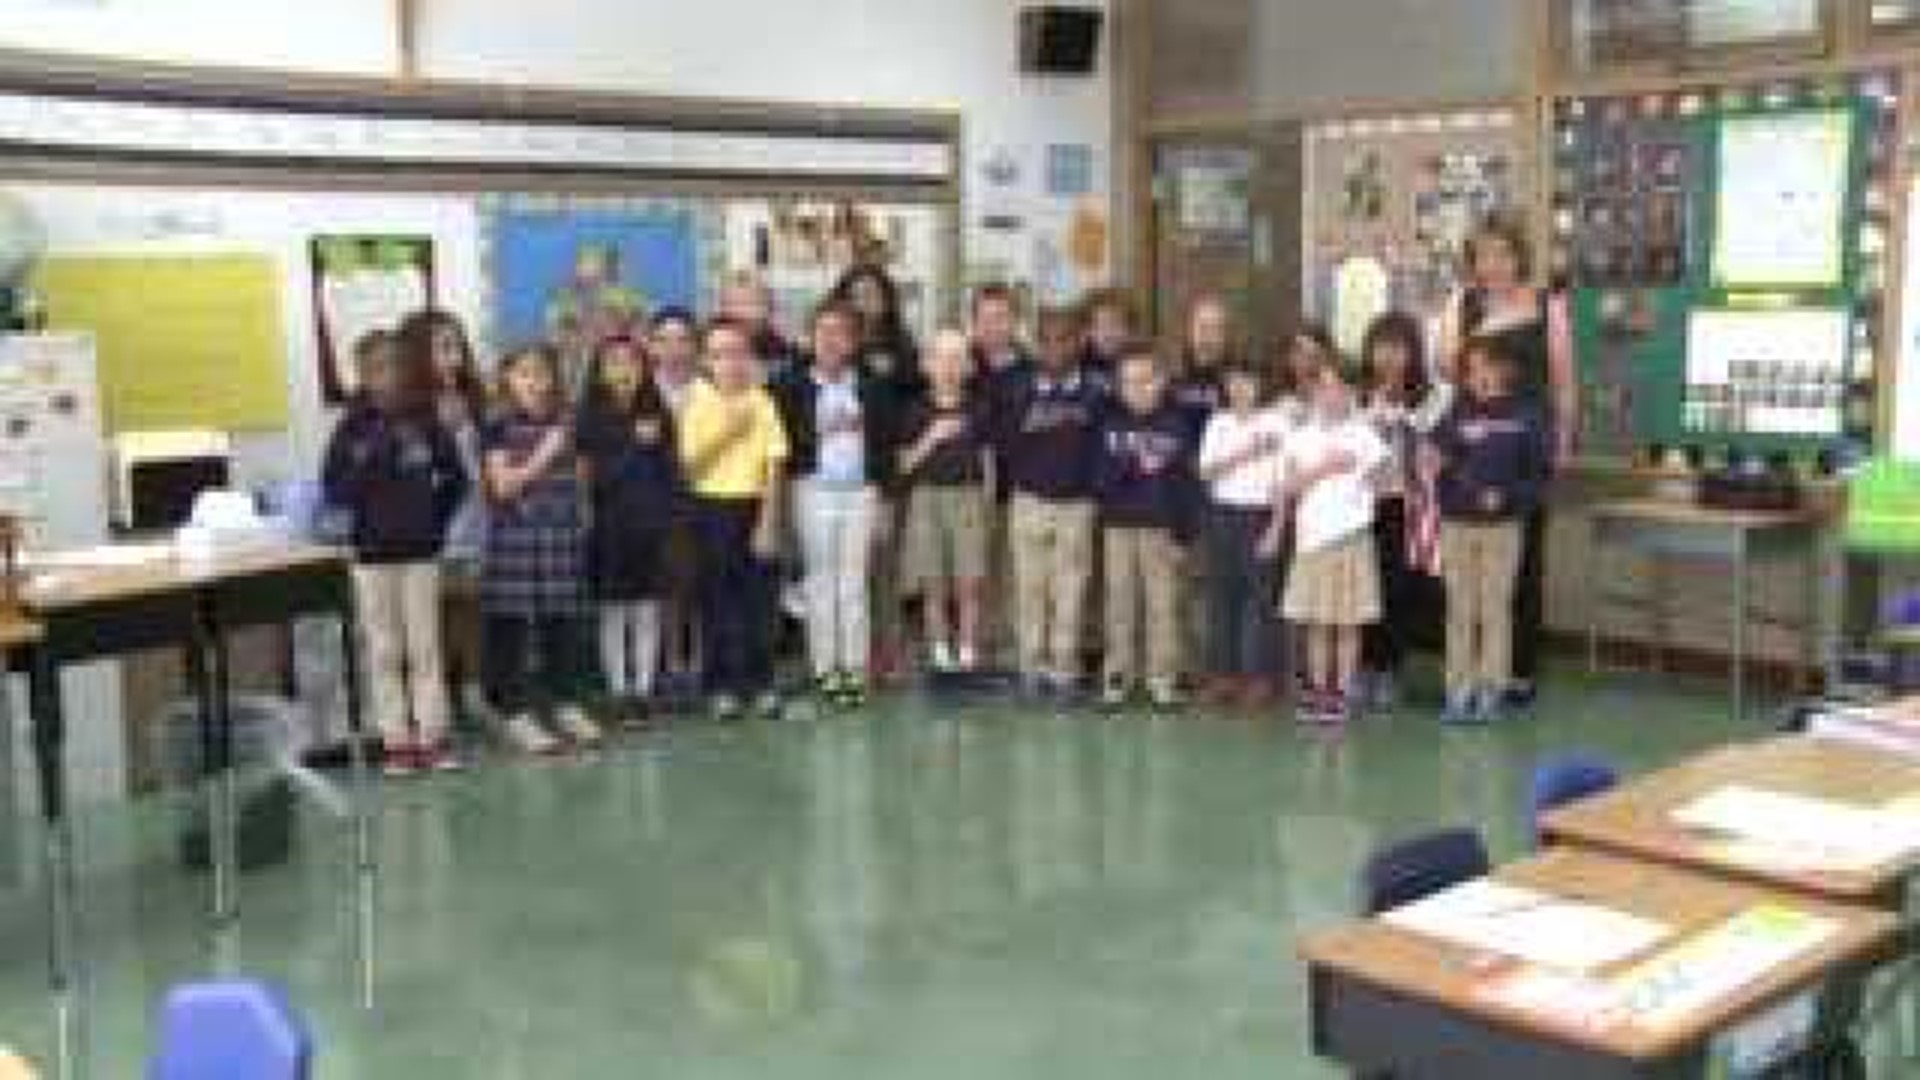 Mrs. Sharp's class recites The Pledge of Allegiance